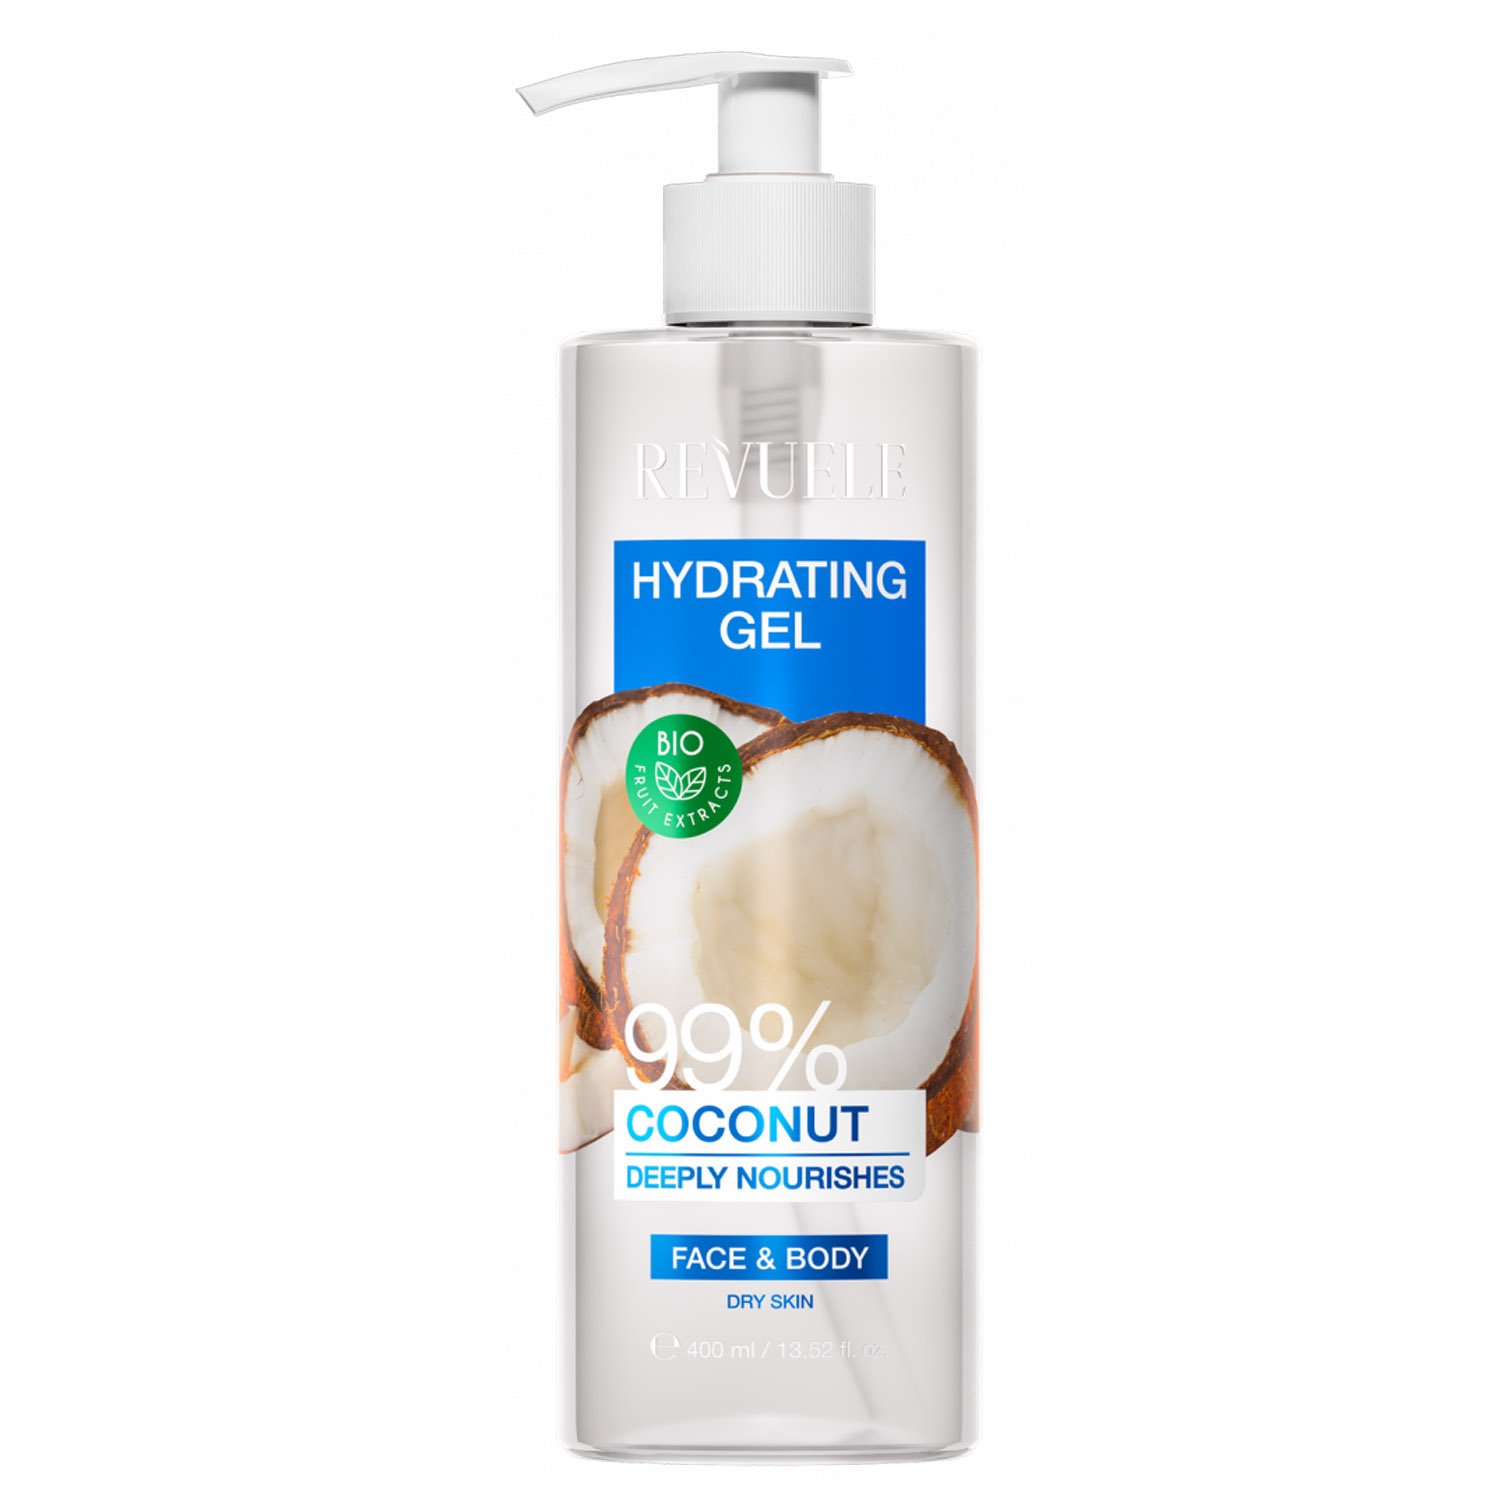 Гель для тела Revuele Hydrating Gel 99% Coconut Deeply Nourishes, увлажняющий, 400 мл - фото 1